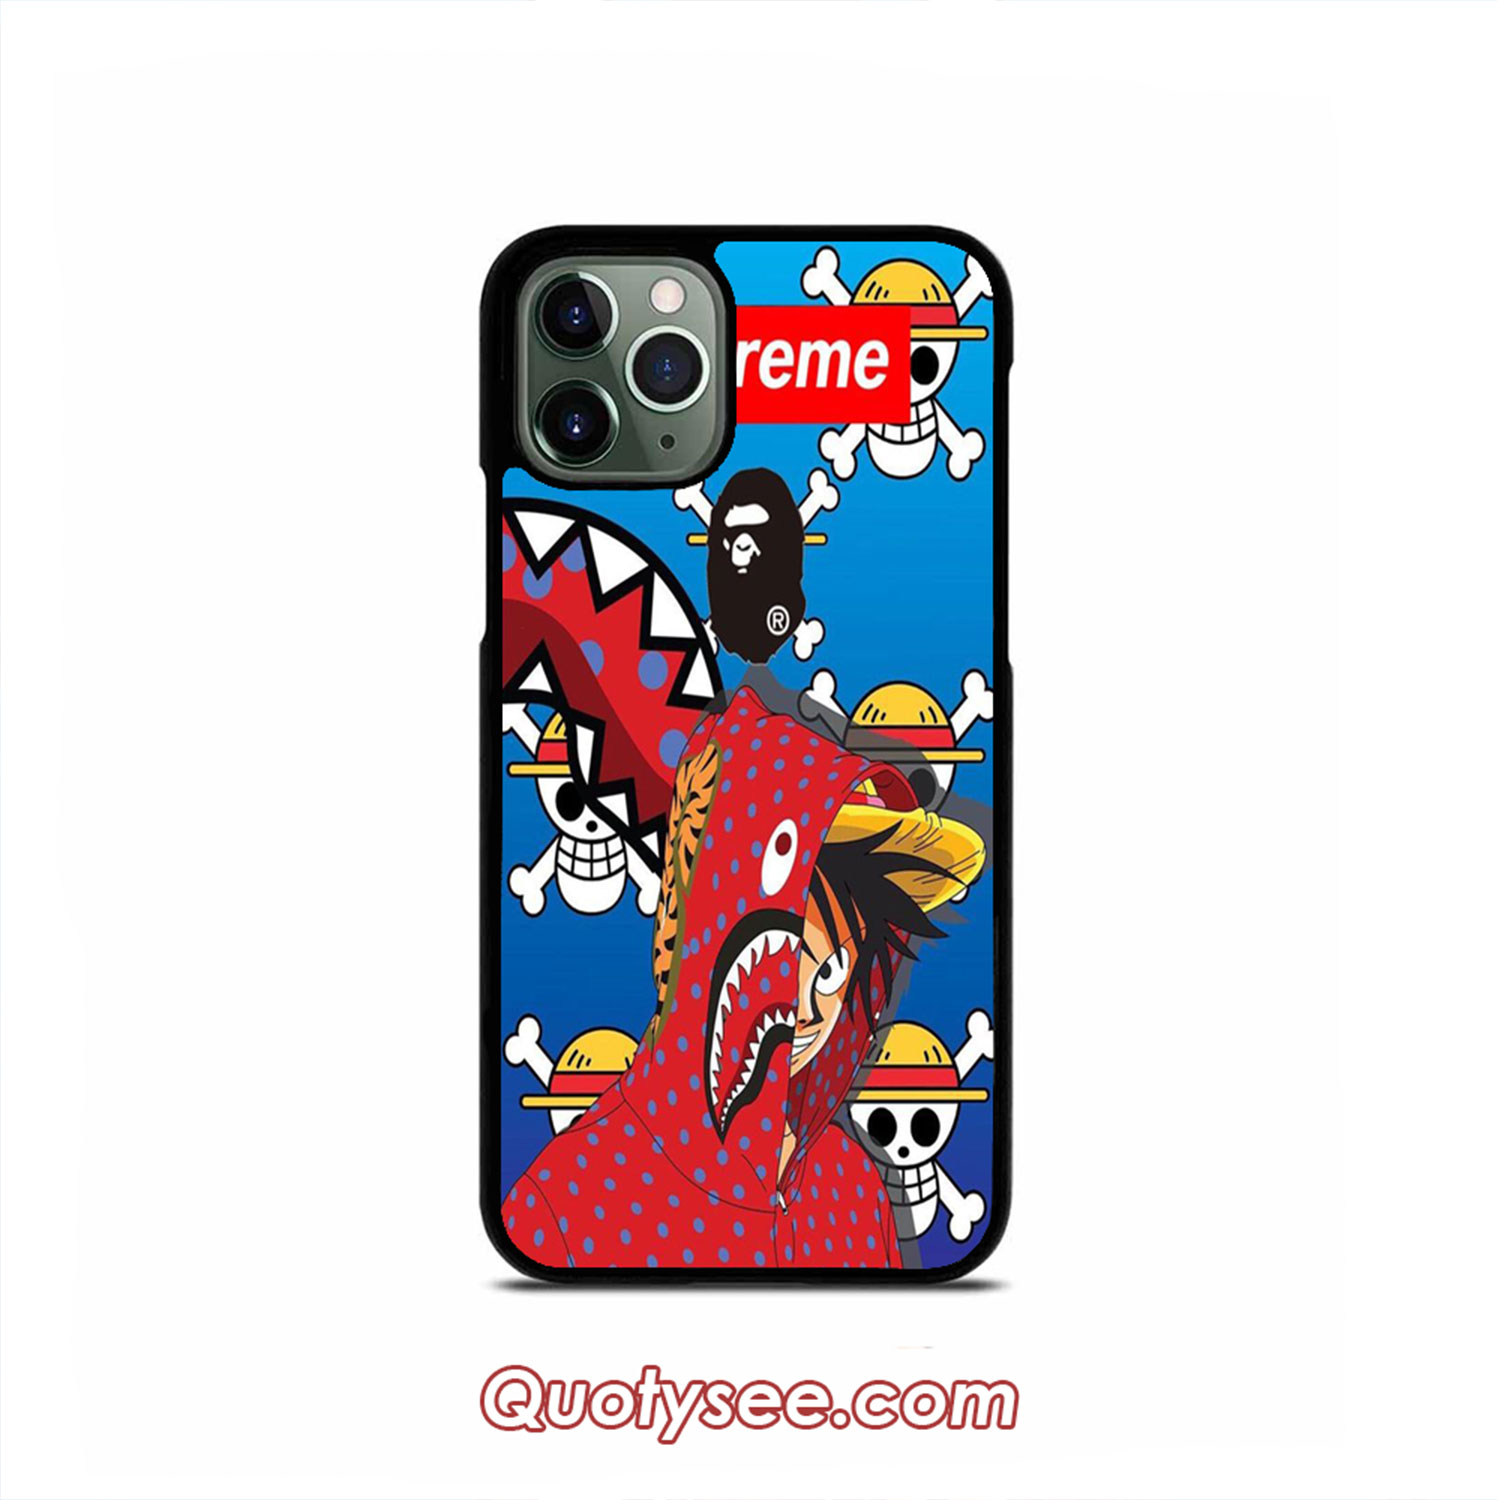 One Piece Supreme x BAPE iPhone 11/11 Pro/11 Pro Max Case